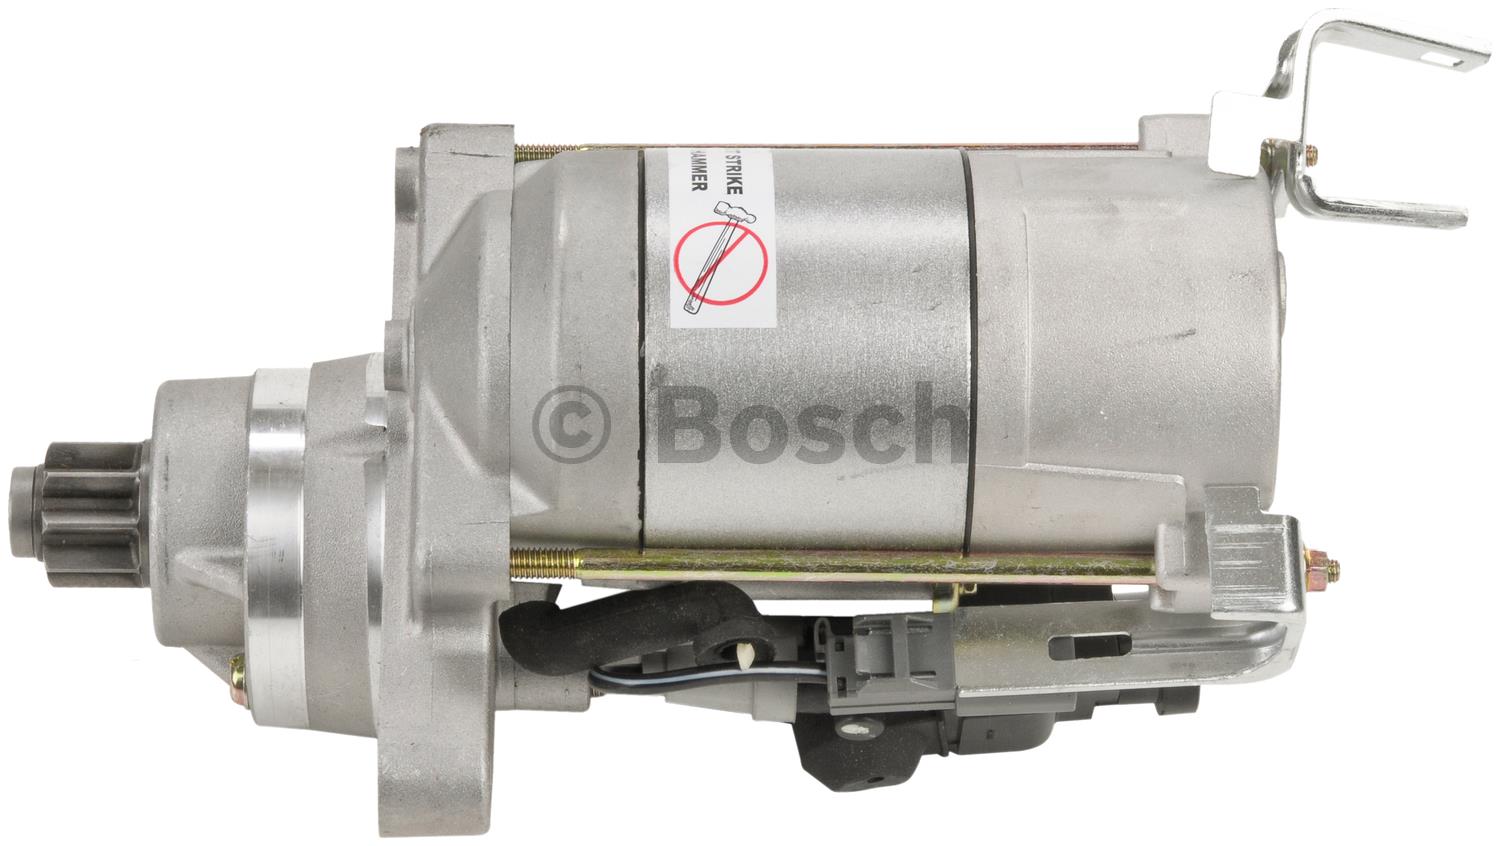 Picture of Bosch SR1300X RE STARTER